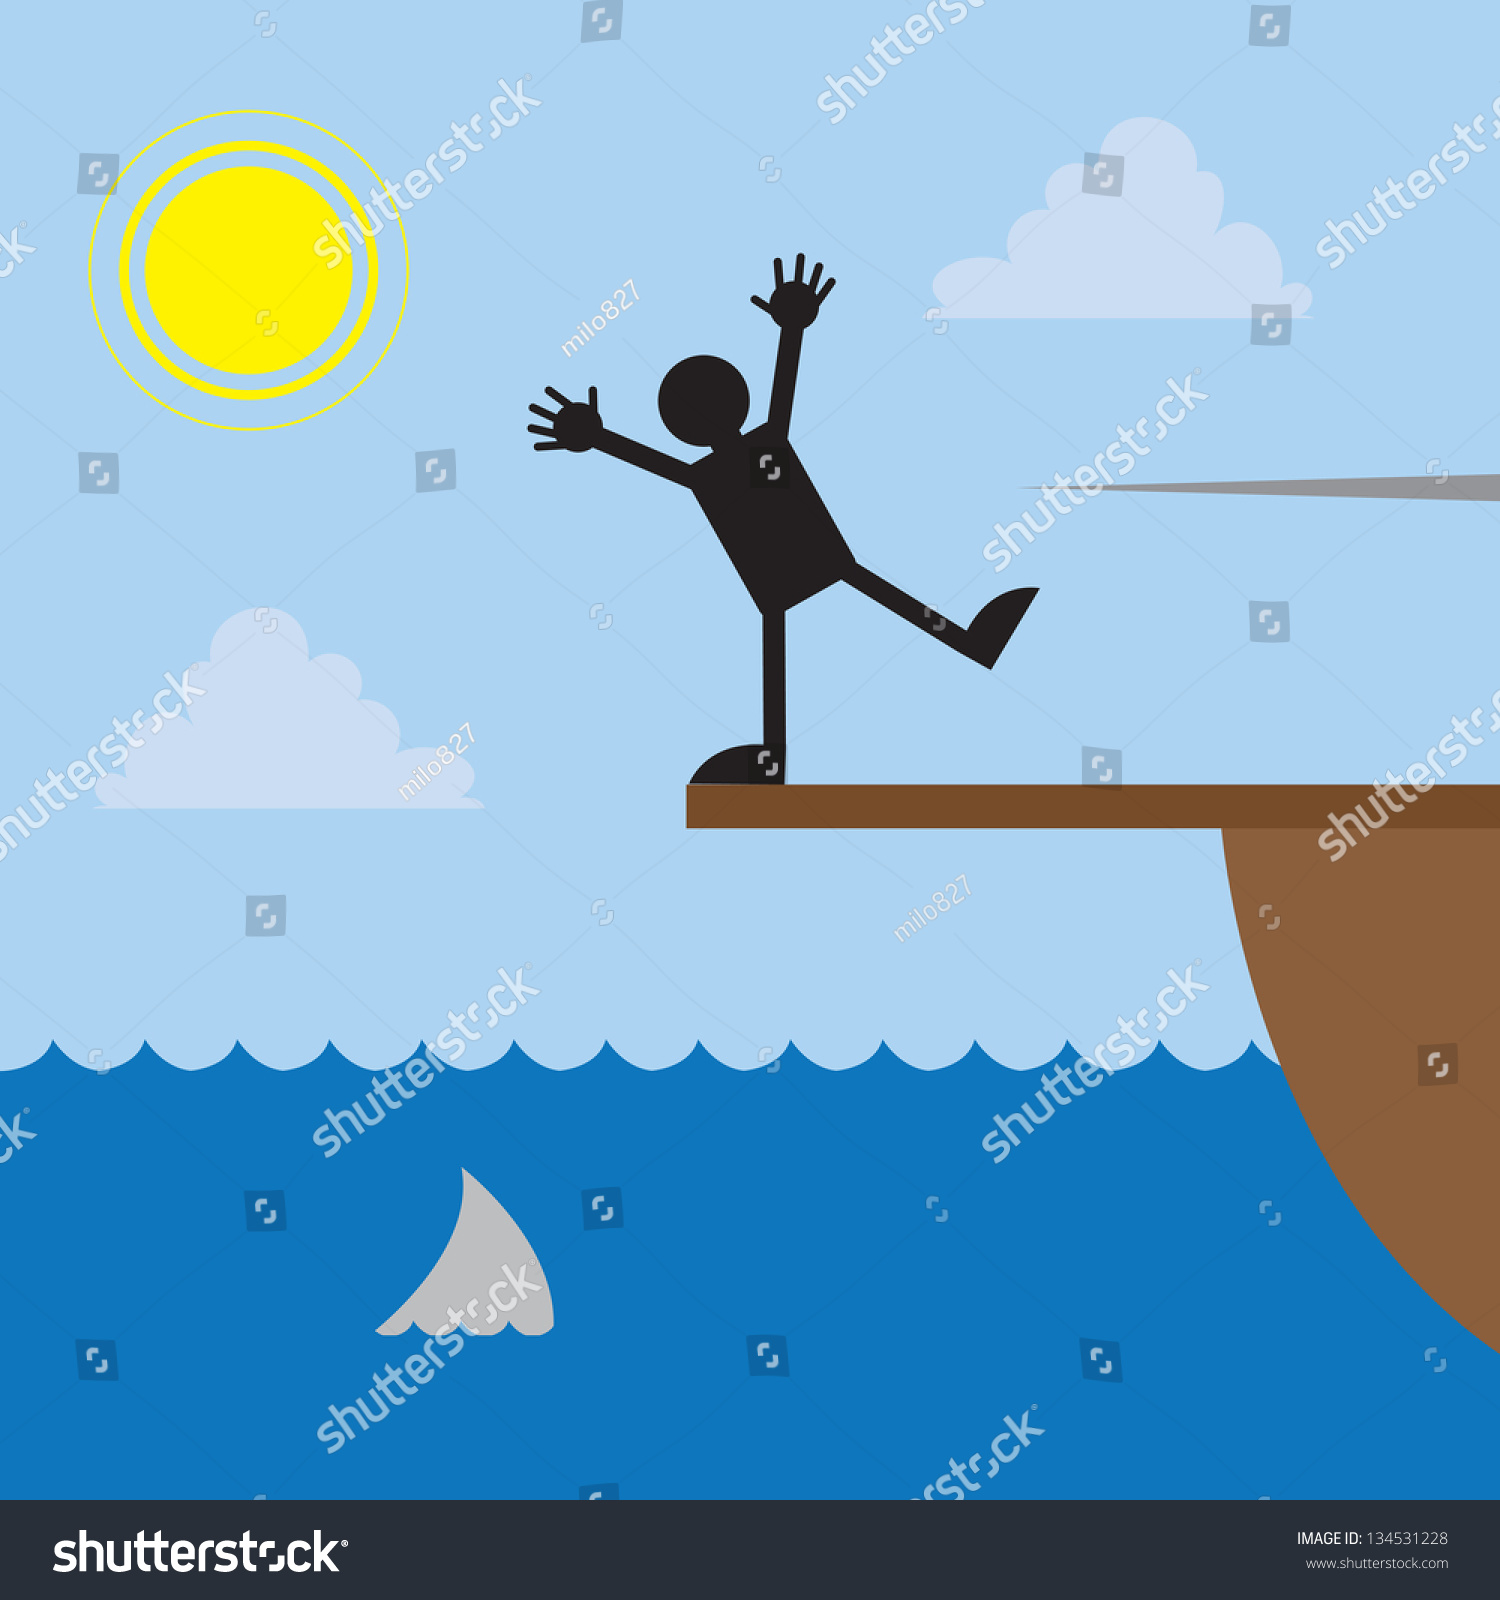 http://image.shutterstock.com/z/stock-vector-figure-walking-the-plank-of-a-pirate-ship-134531228.jpg